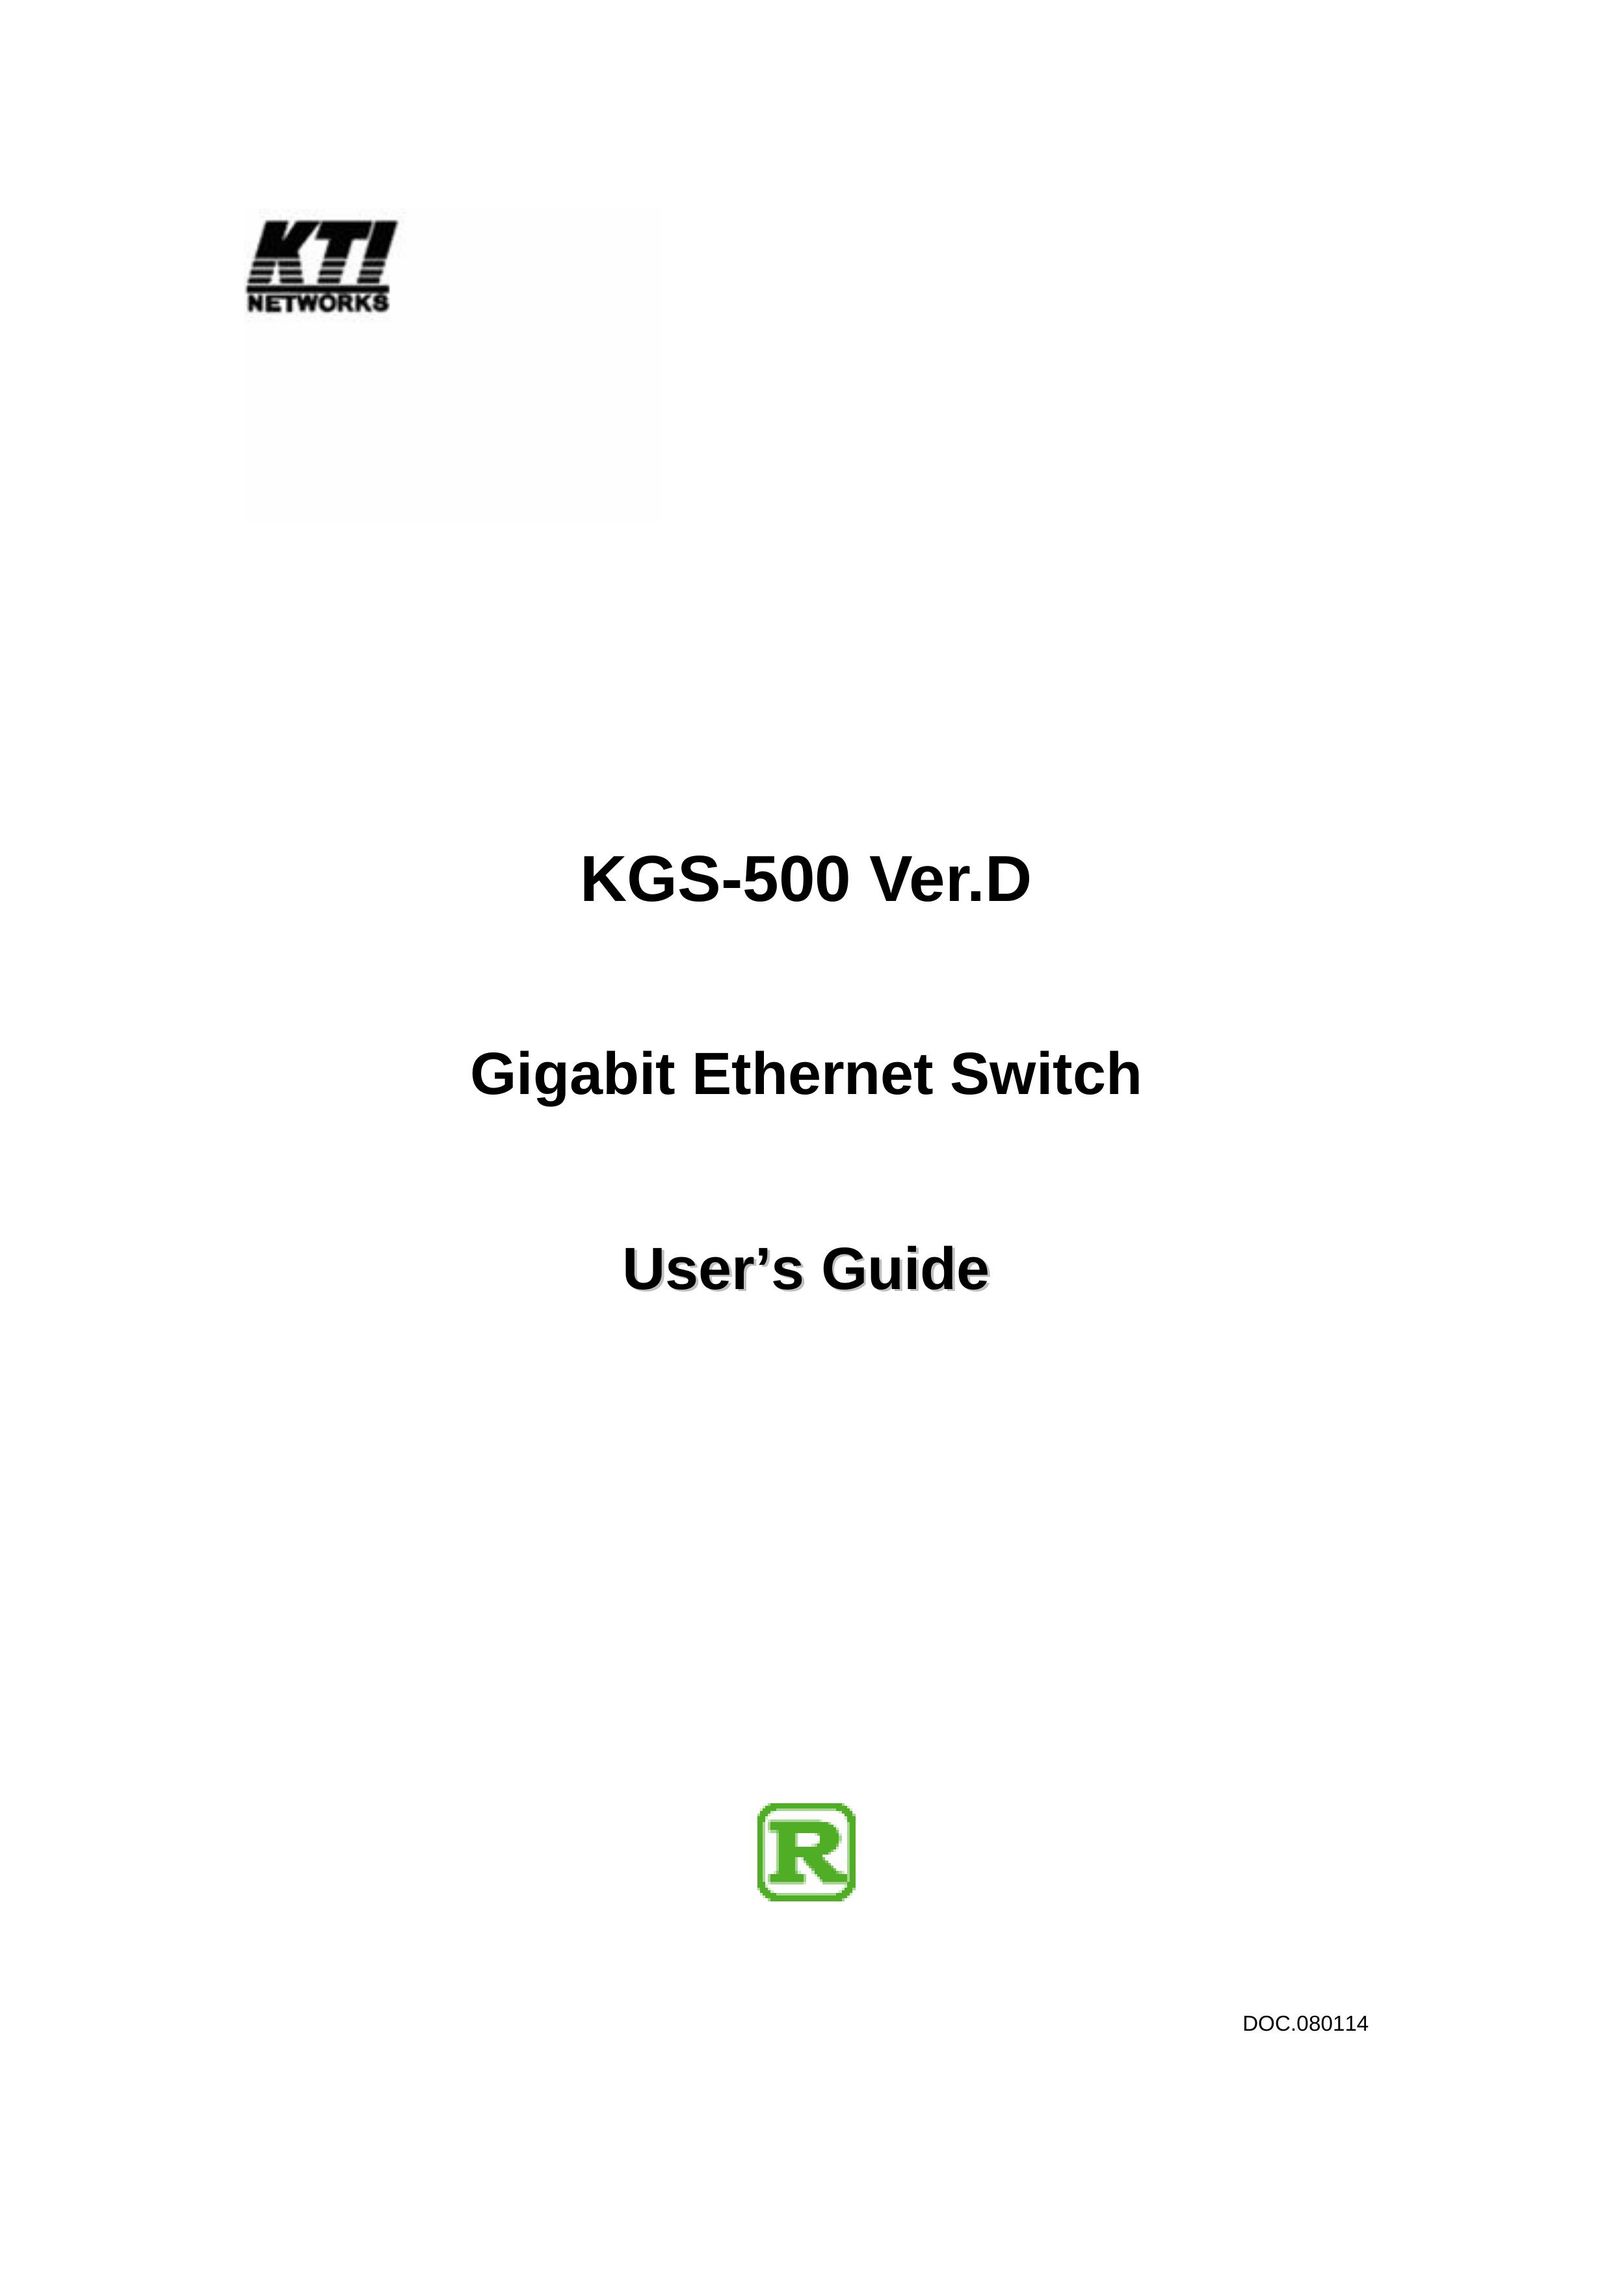 KTI Networks KGS-500 Ver.D Switch User Manual